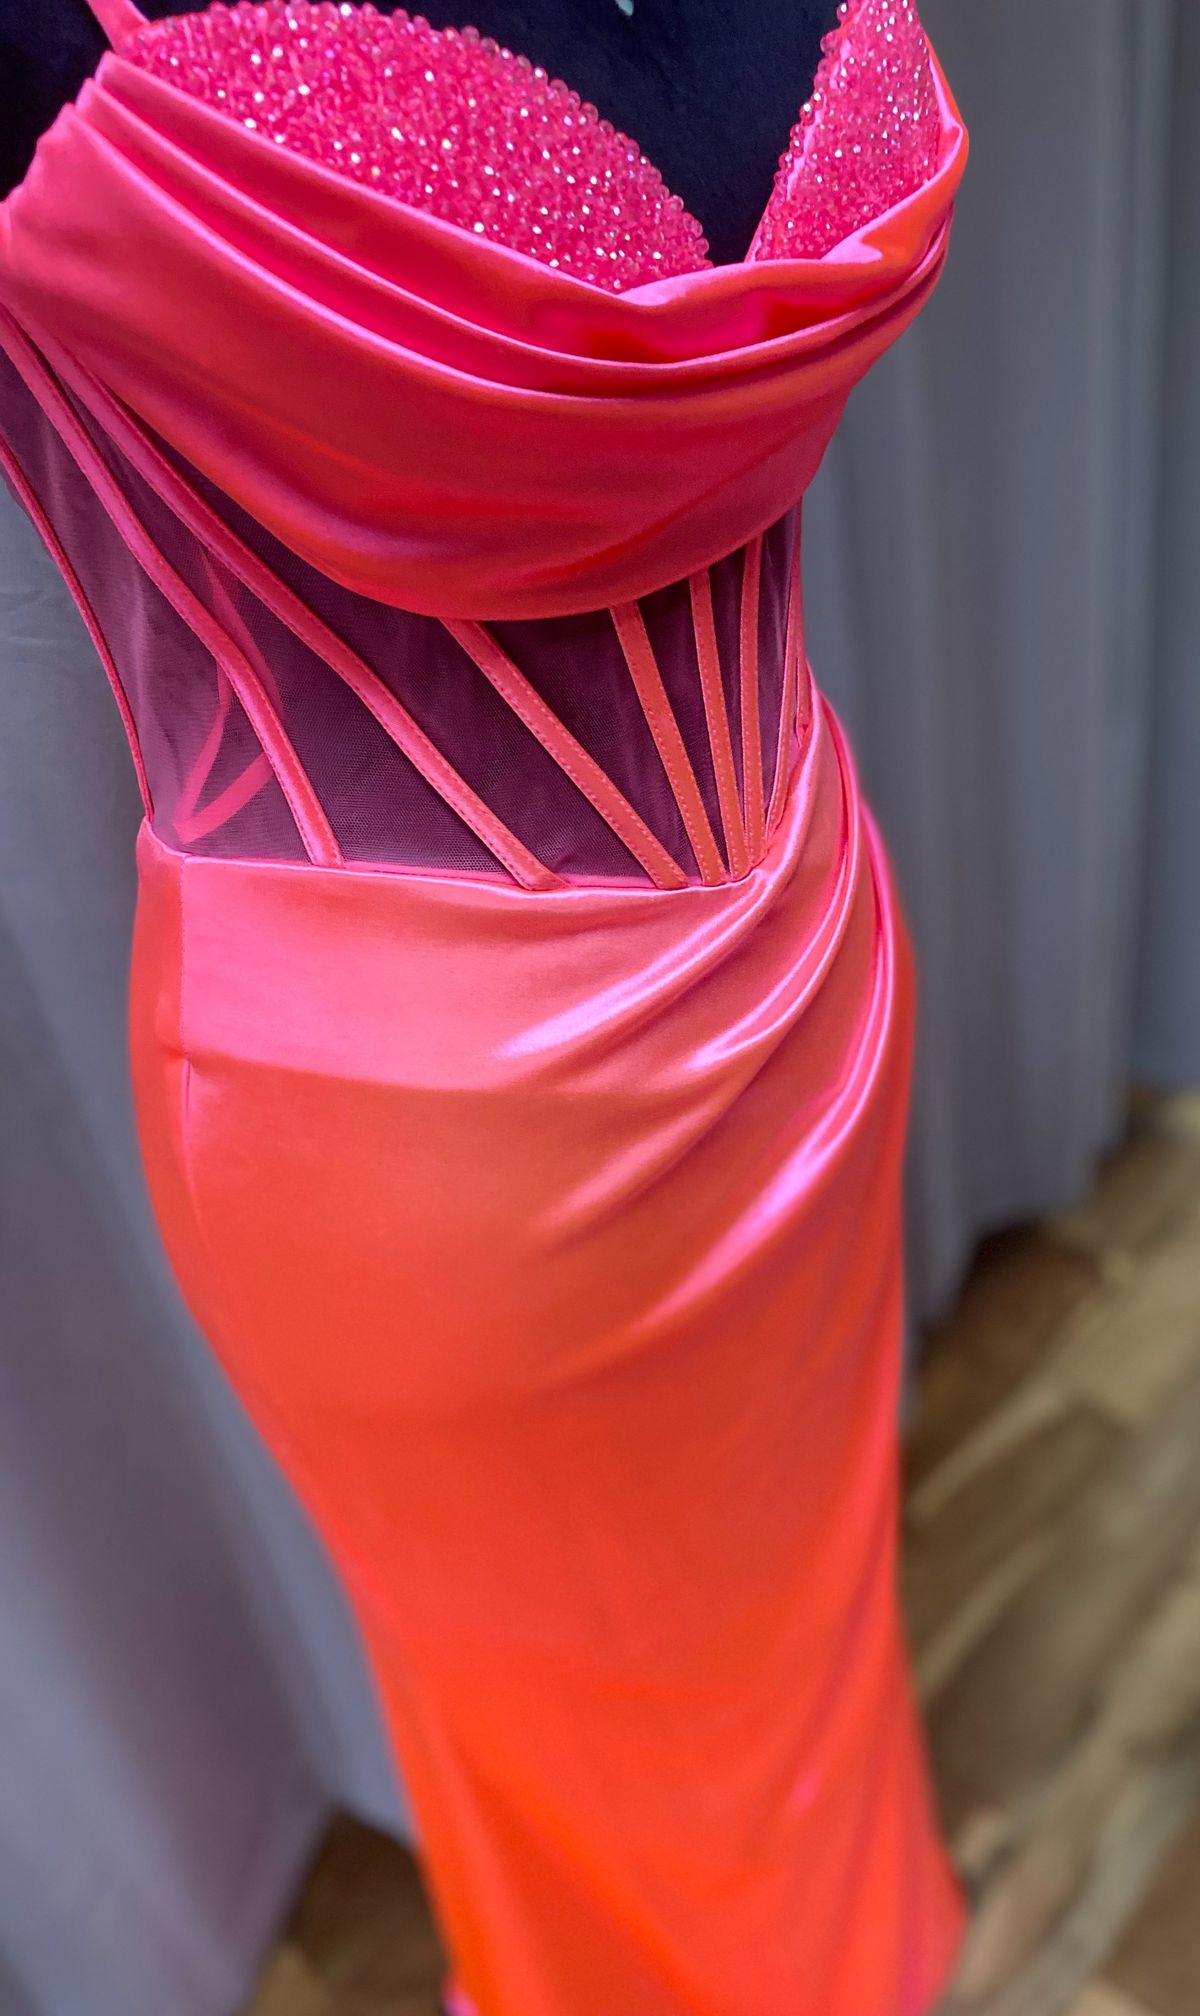 Cinderella Divine Size 4 Prom Plunge Sequined Hot Pink Side Slit Dress on Queenly